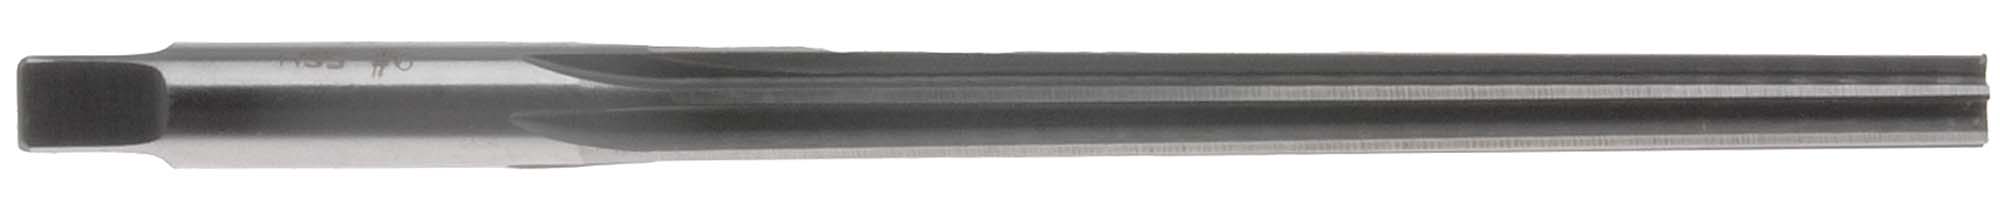 #2/0 Straight Flute Taper Pin Reamer, High Speed Steel